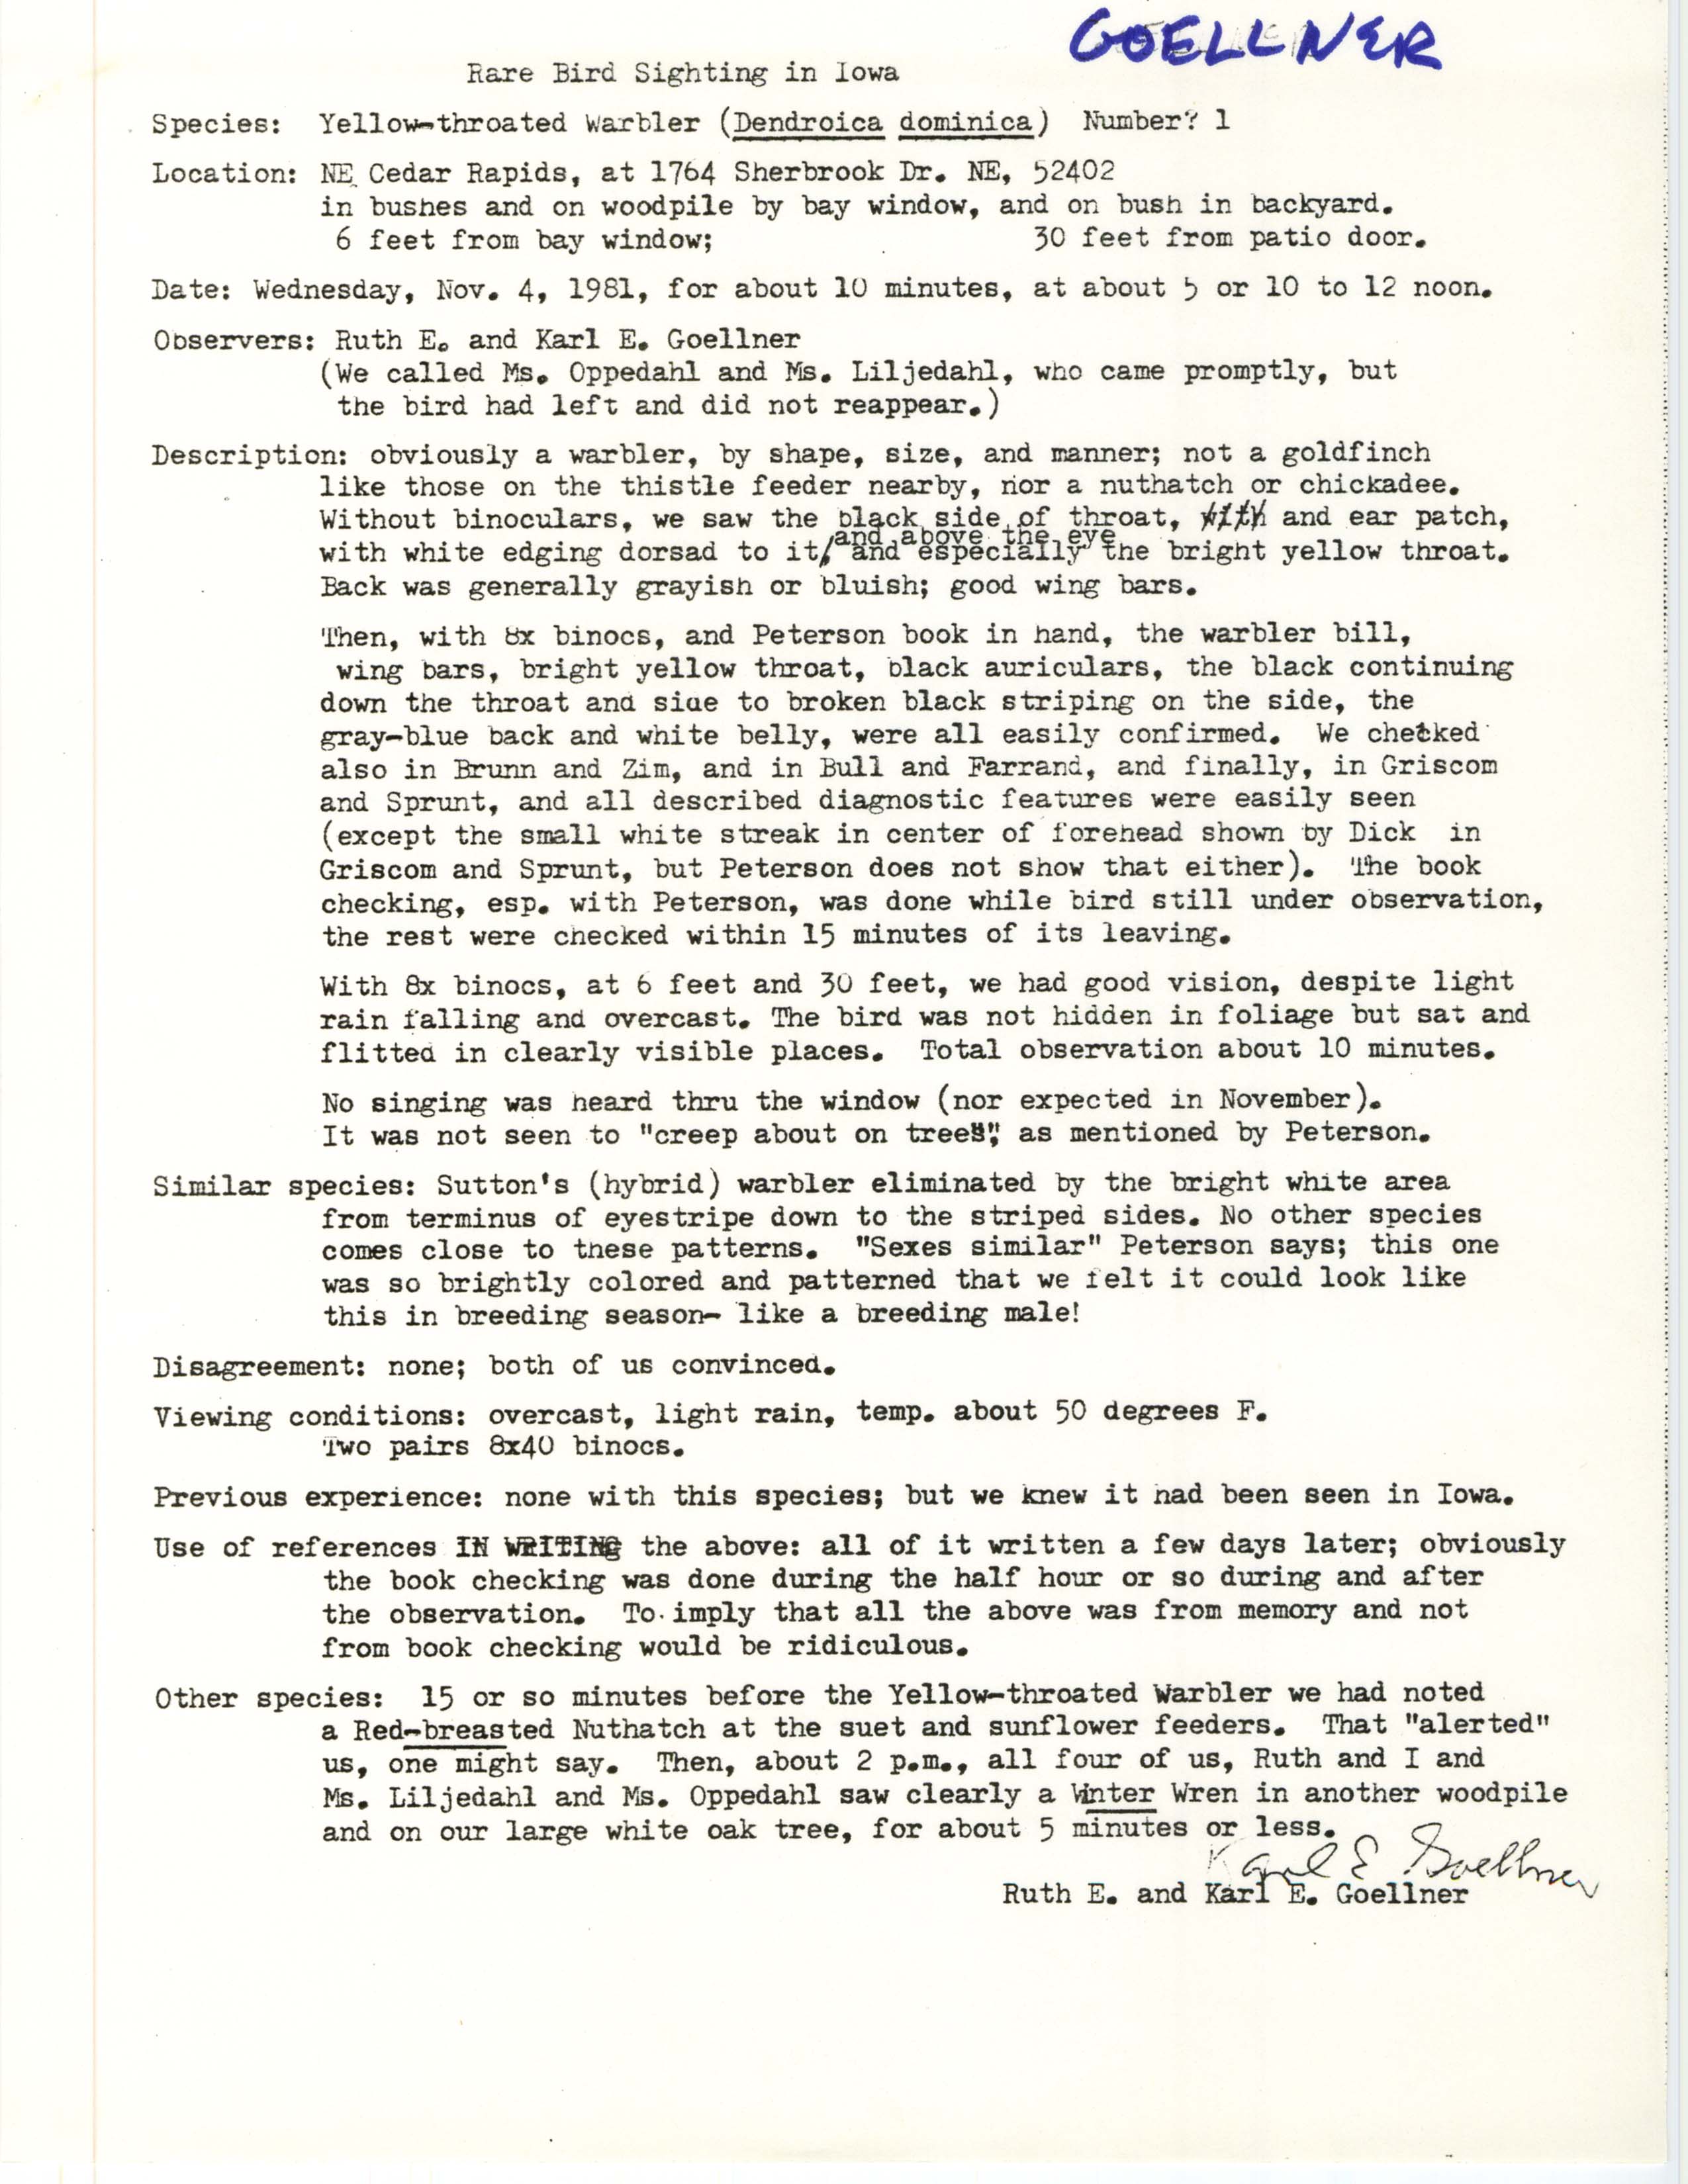 Rare bird documentation form for Yellow-throated Warbler at Cedar Rapids, 1981